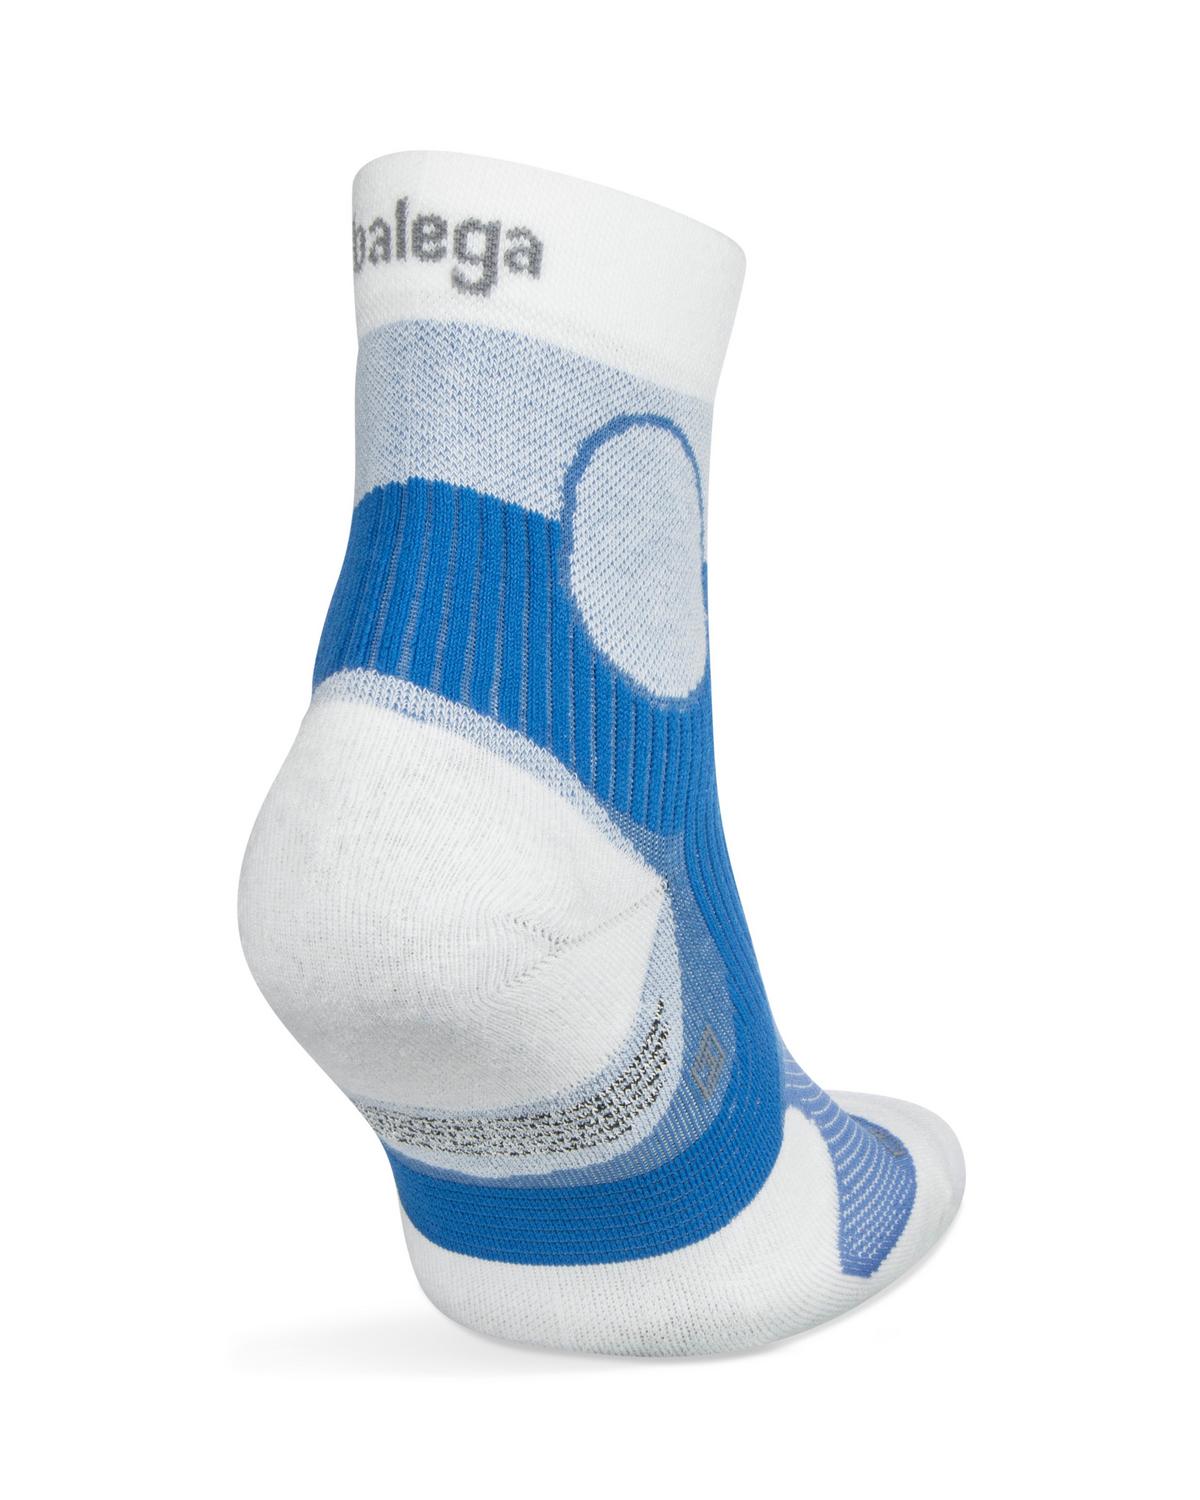 Balega Support Crew Socks  -  Blue